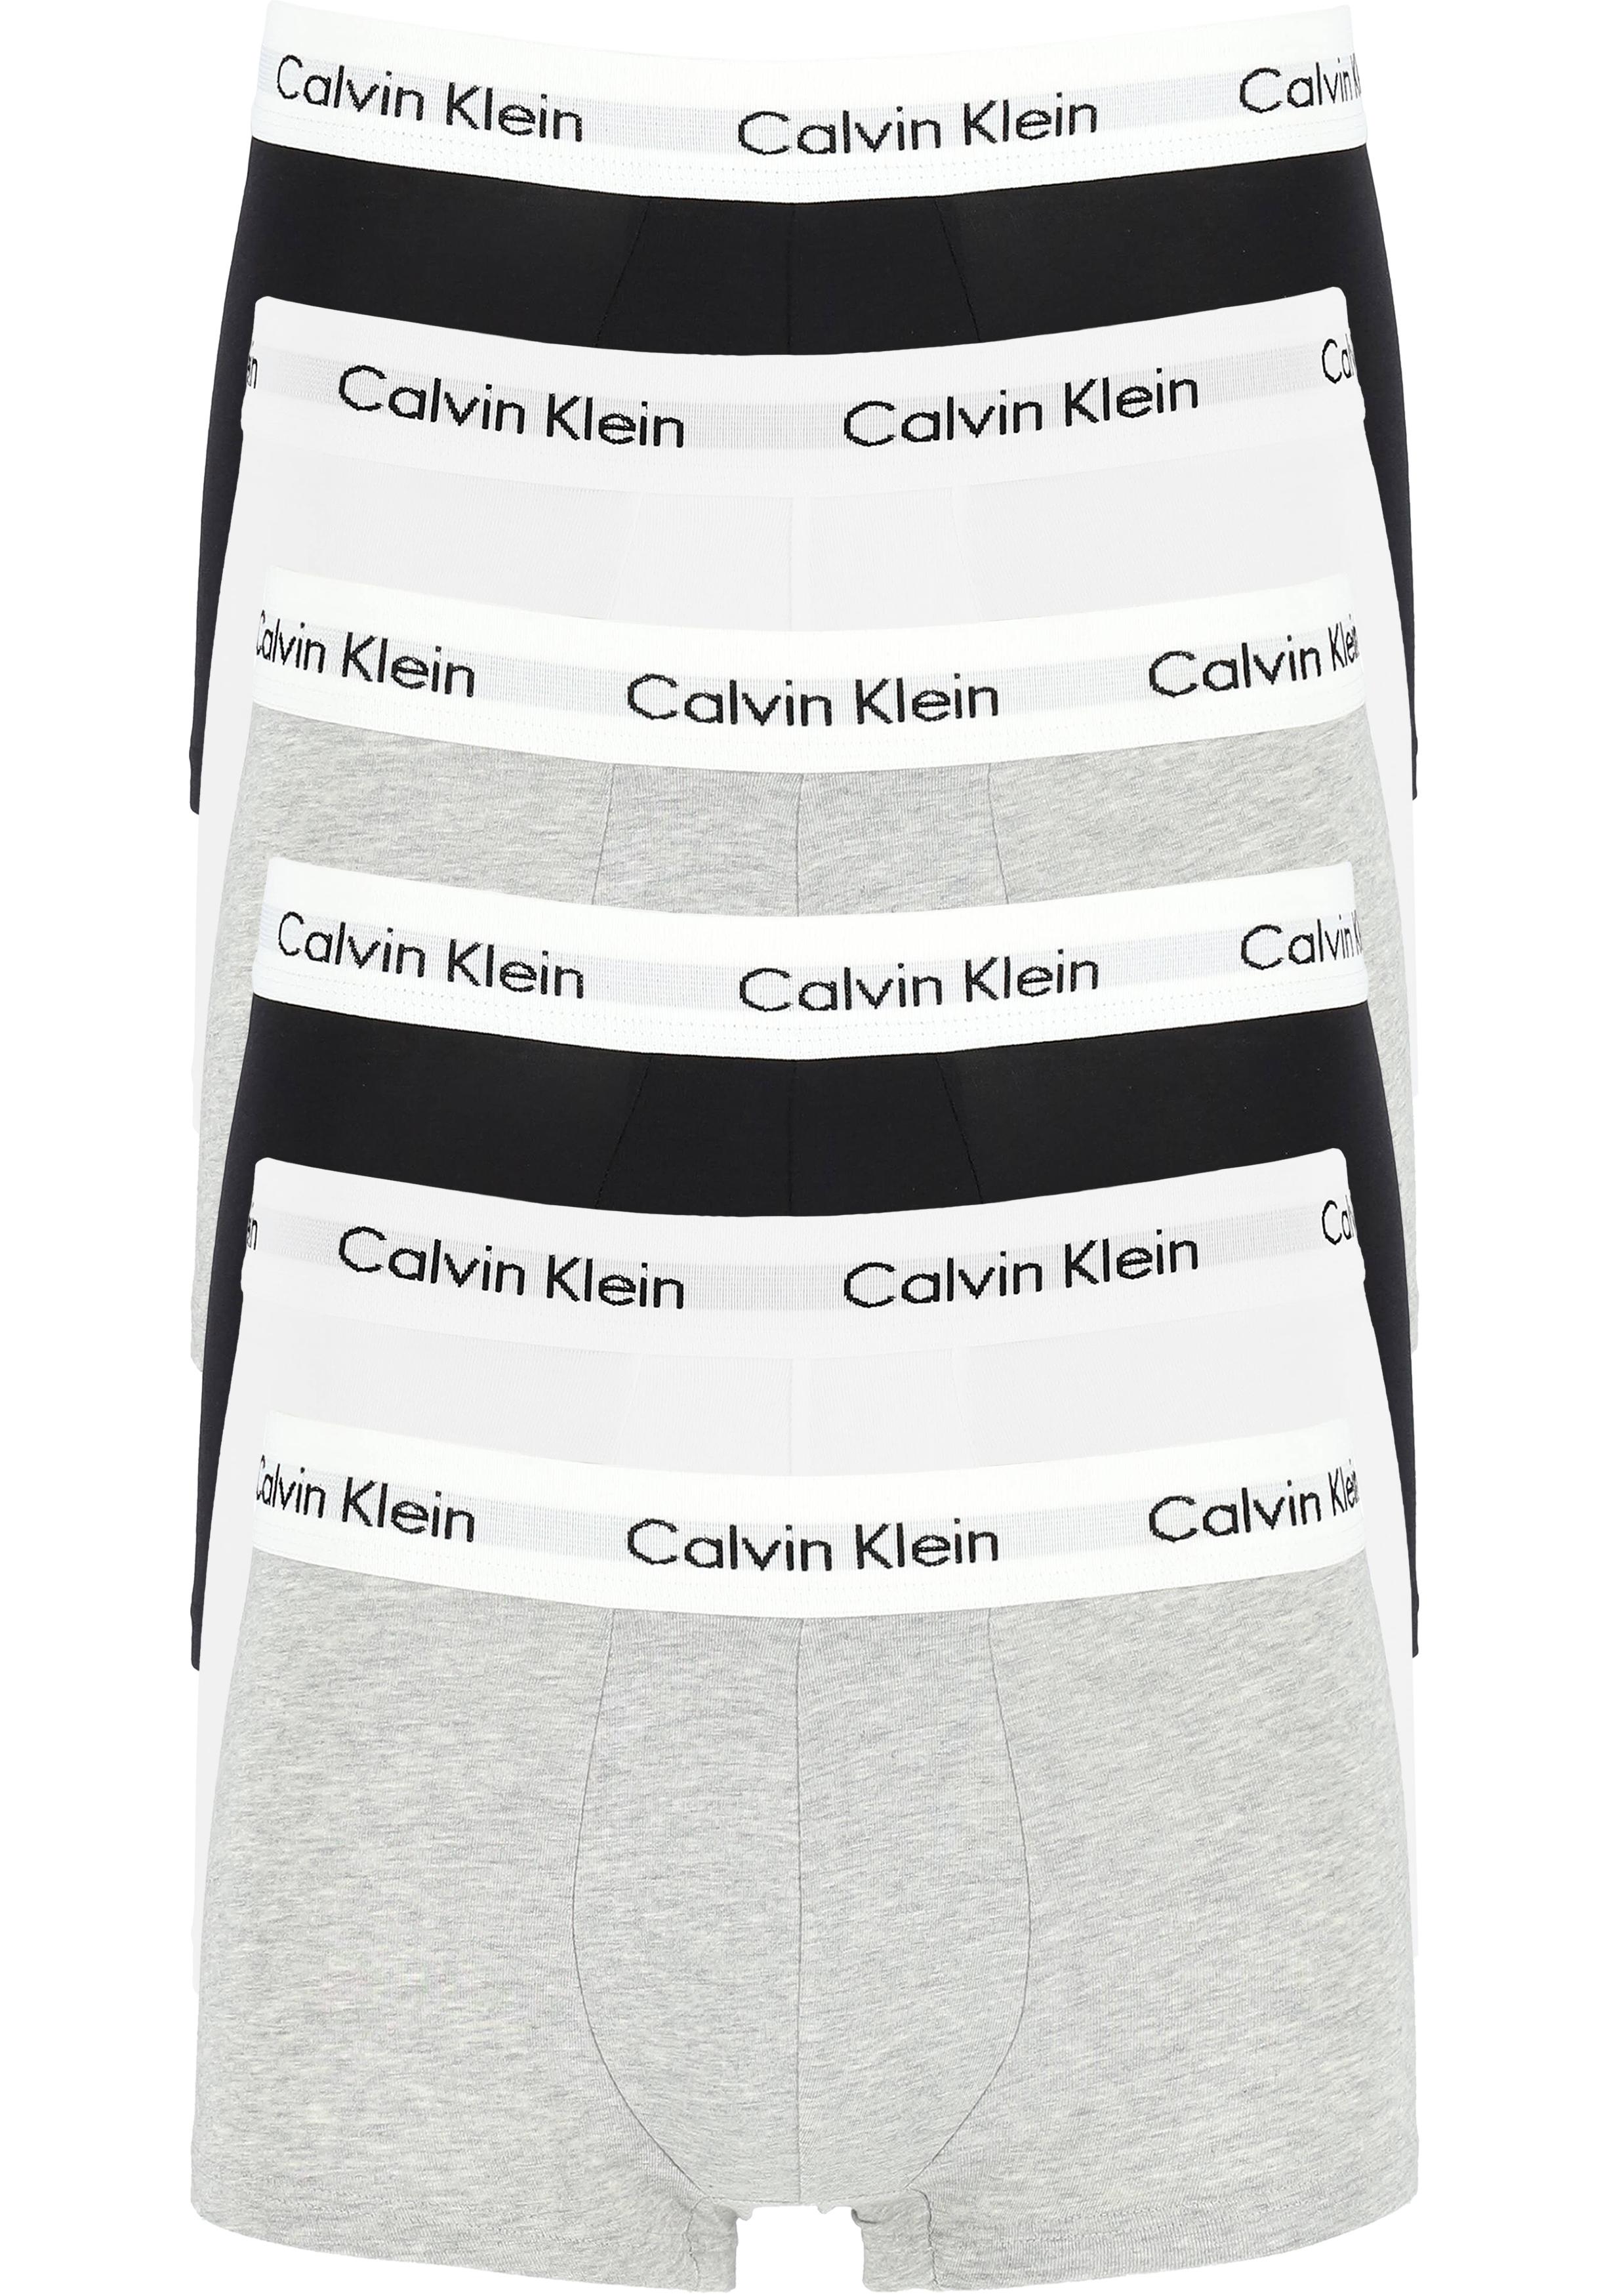 Minachting Geleidbaarheid herder Actie 6-pack: Calvin Klein low rise trunks, lage heren boxers kort,... -  Zomer SALE tot 50% korting